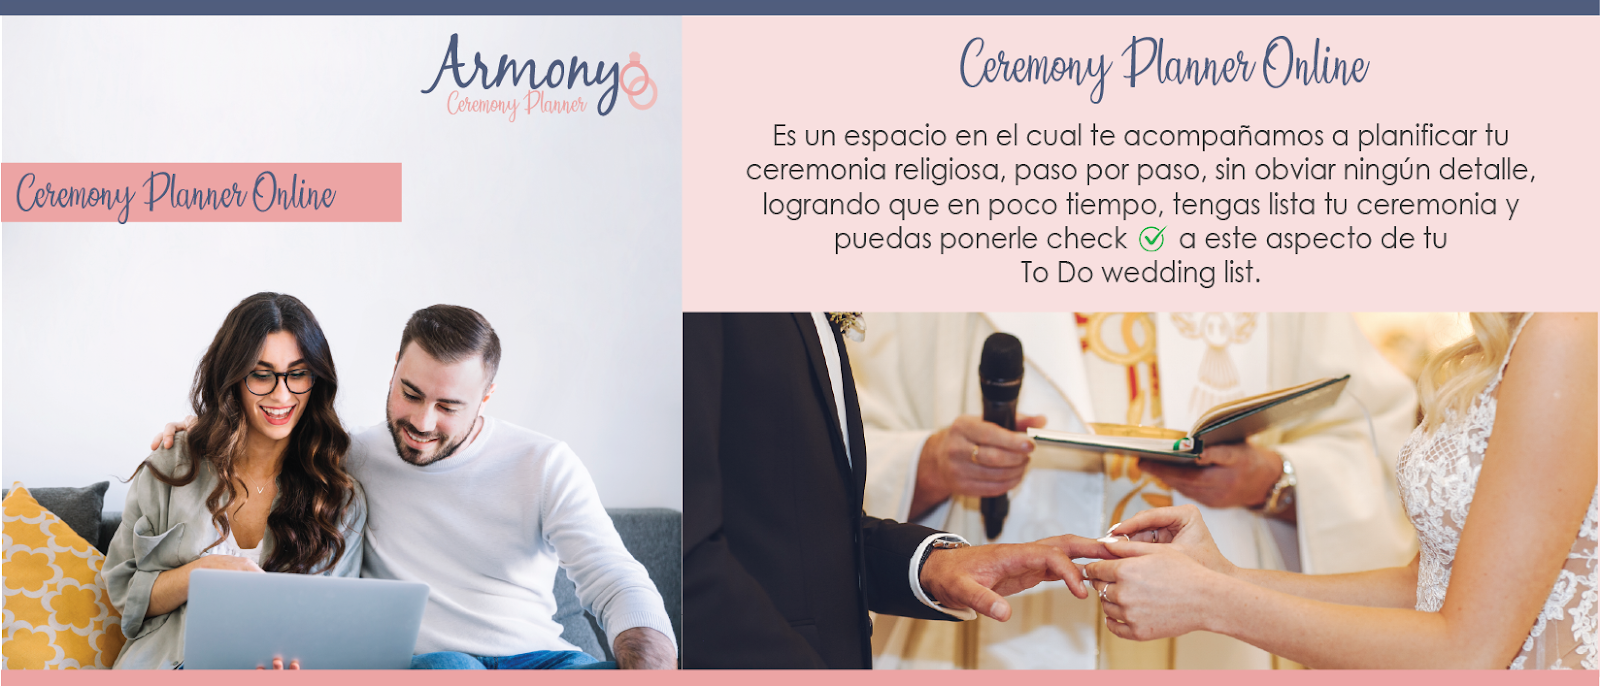 Ceremony planner online